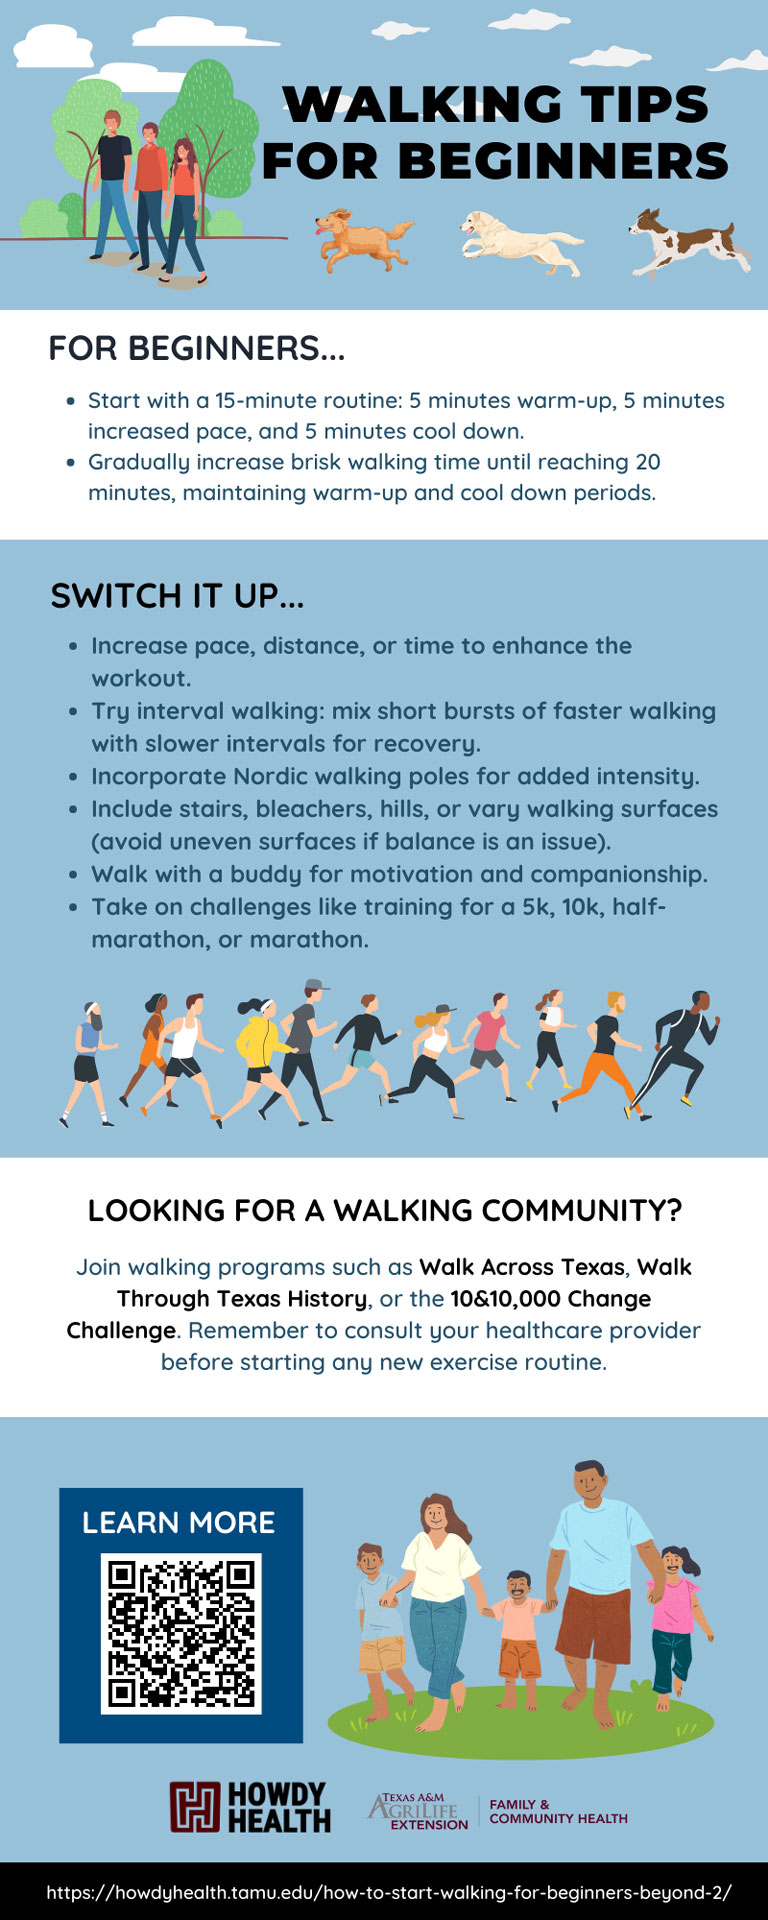 Walking Program that includes a 12-Week Plan for Beginners